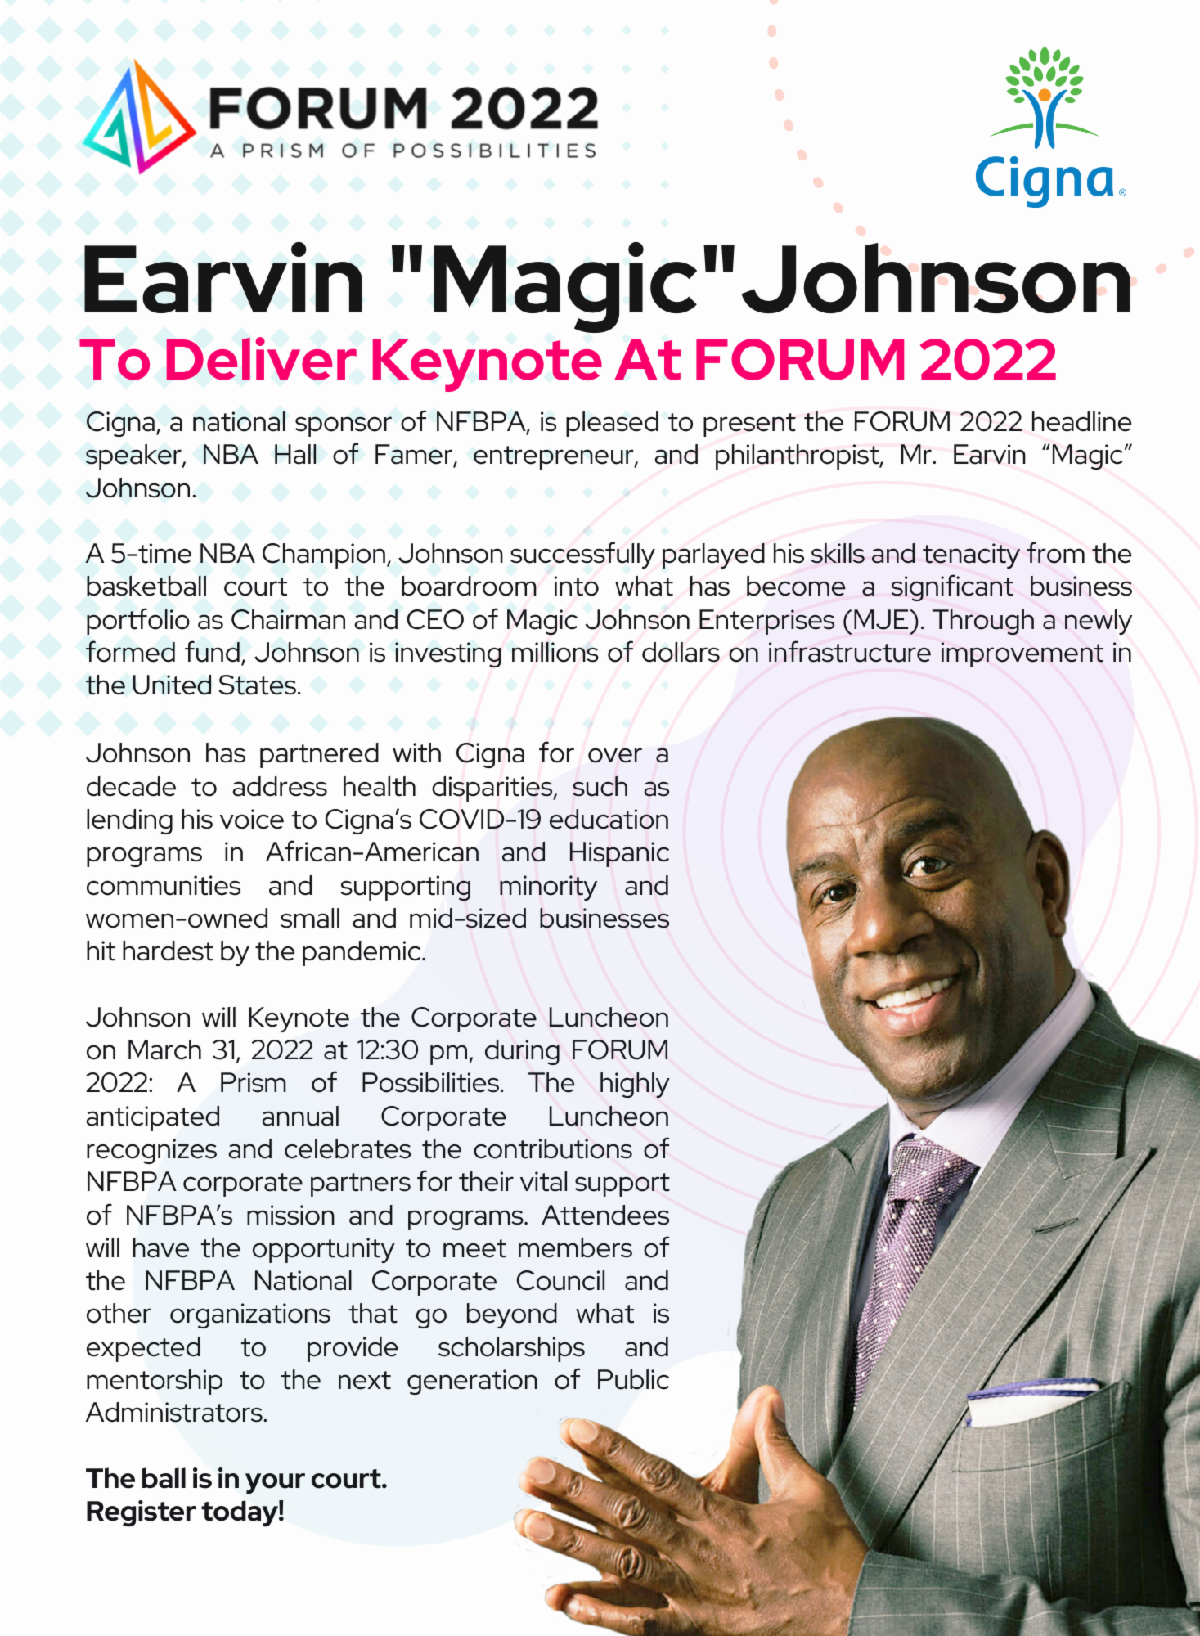 Earvin Magic Johnson